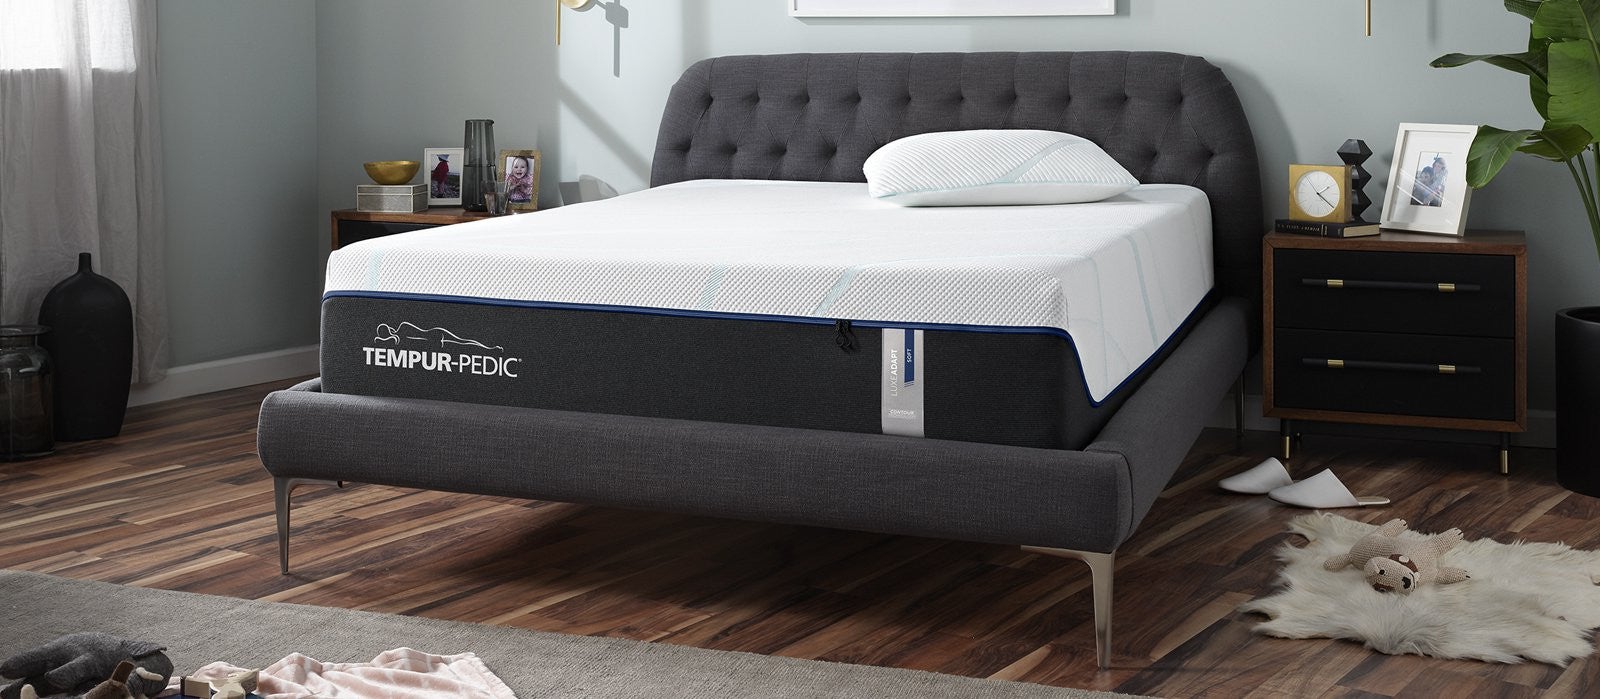 tempur pedic performance luxury mattress pad reviews